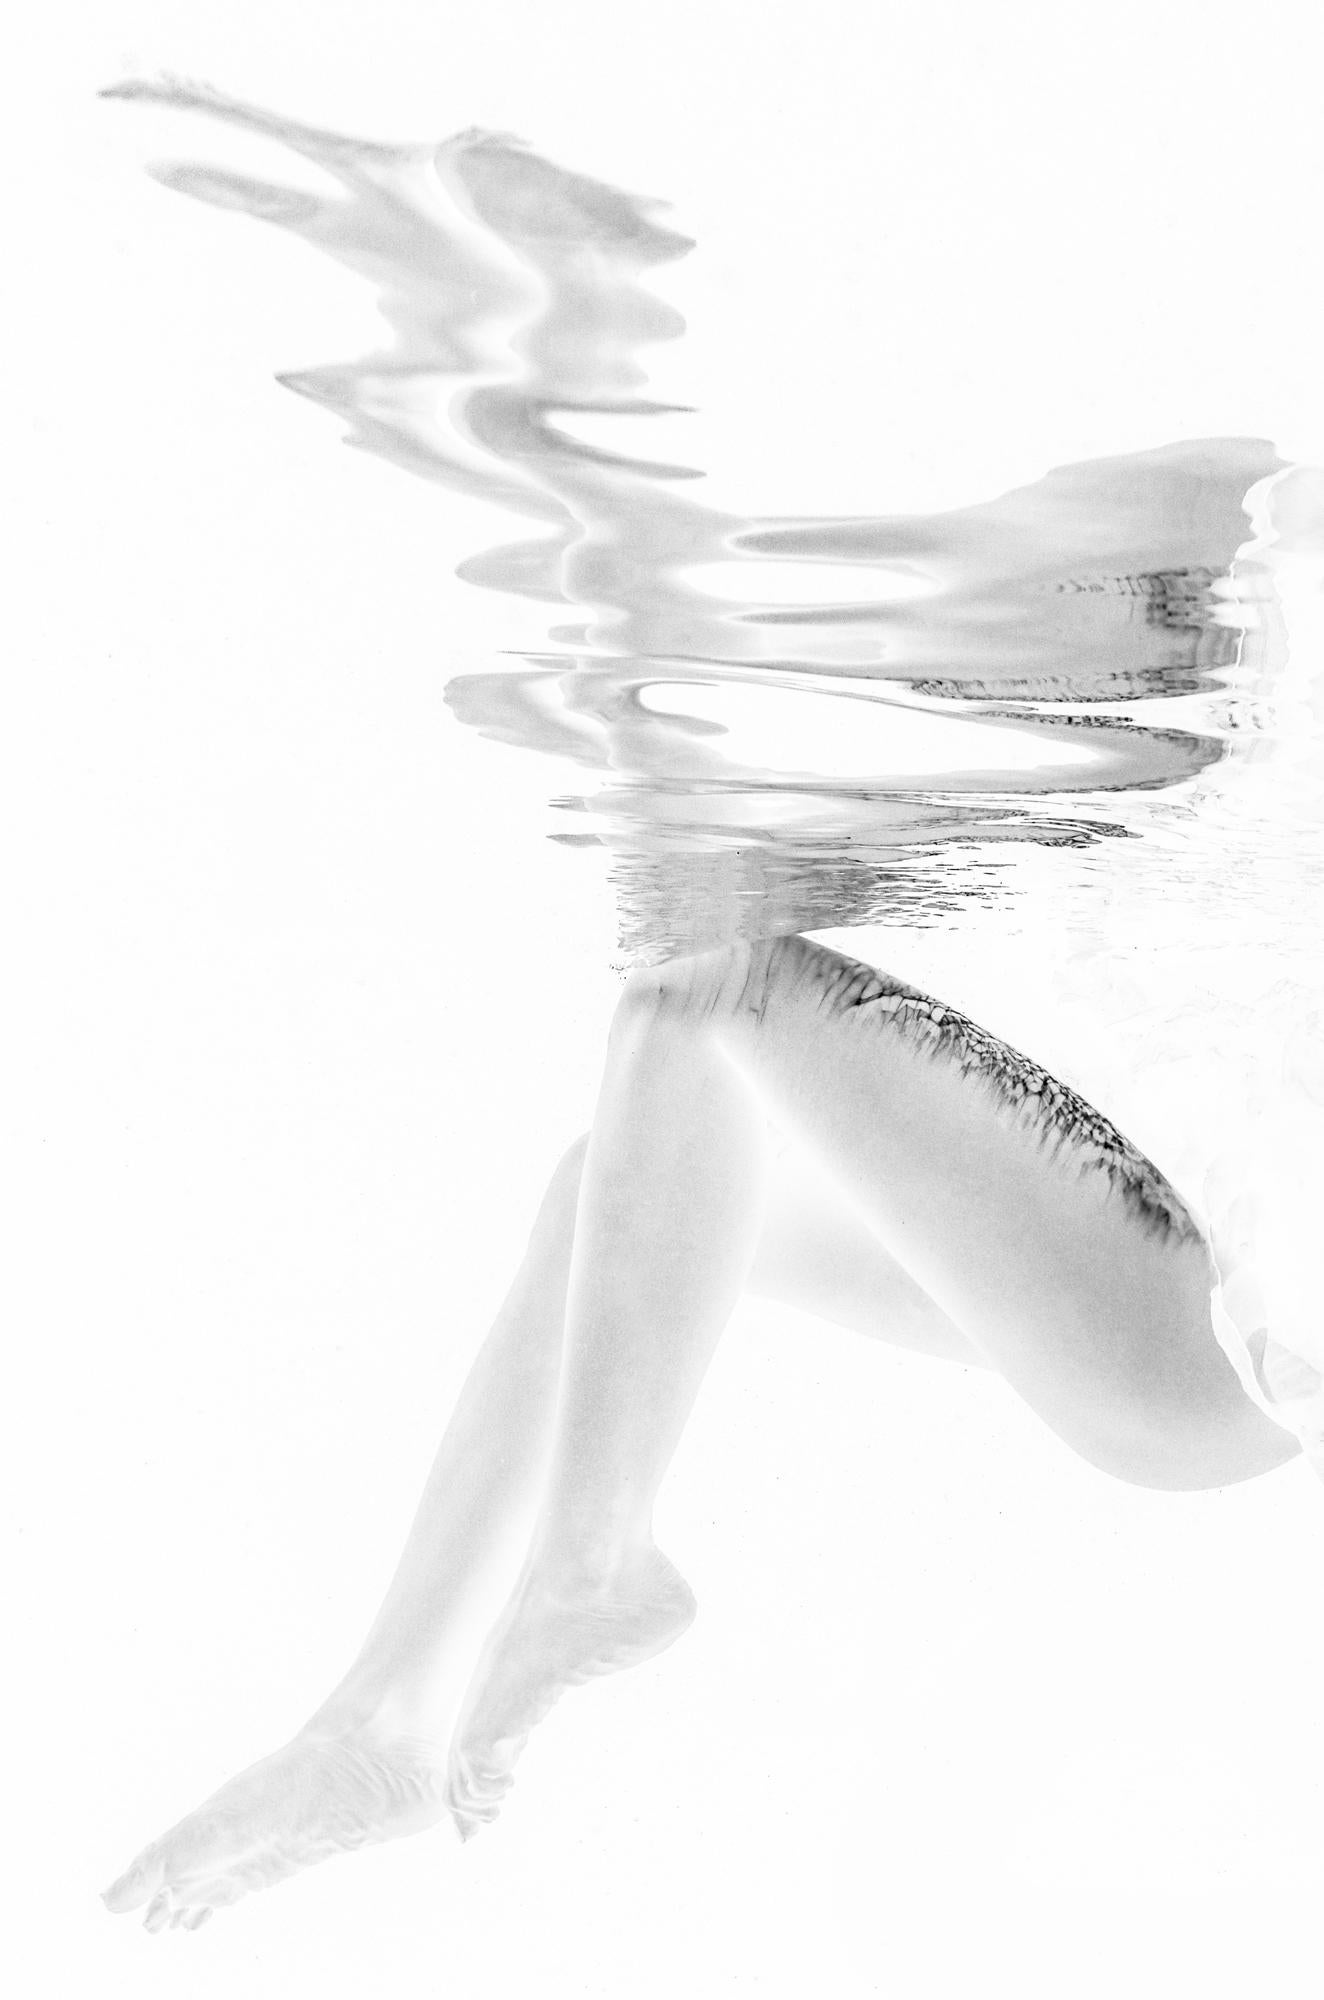 Figurative Photograph Alex Sher - Sketch - underwater b&w photograph - archival pigment print 35x23".